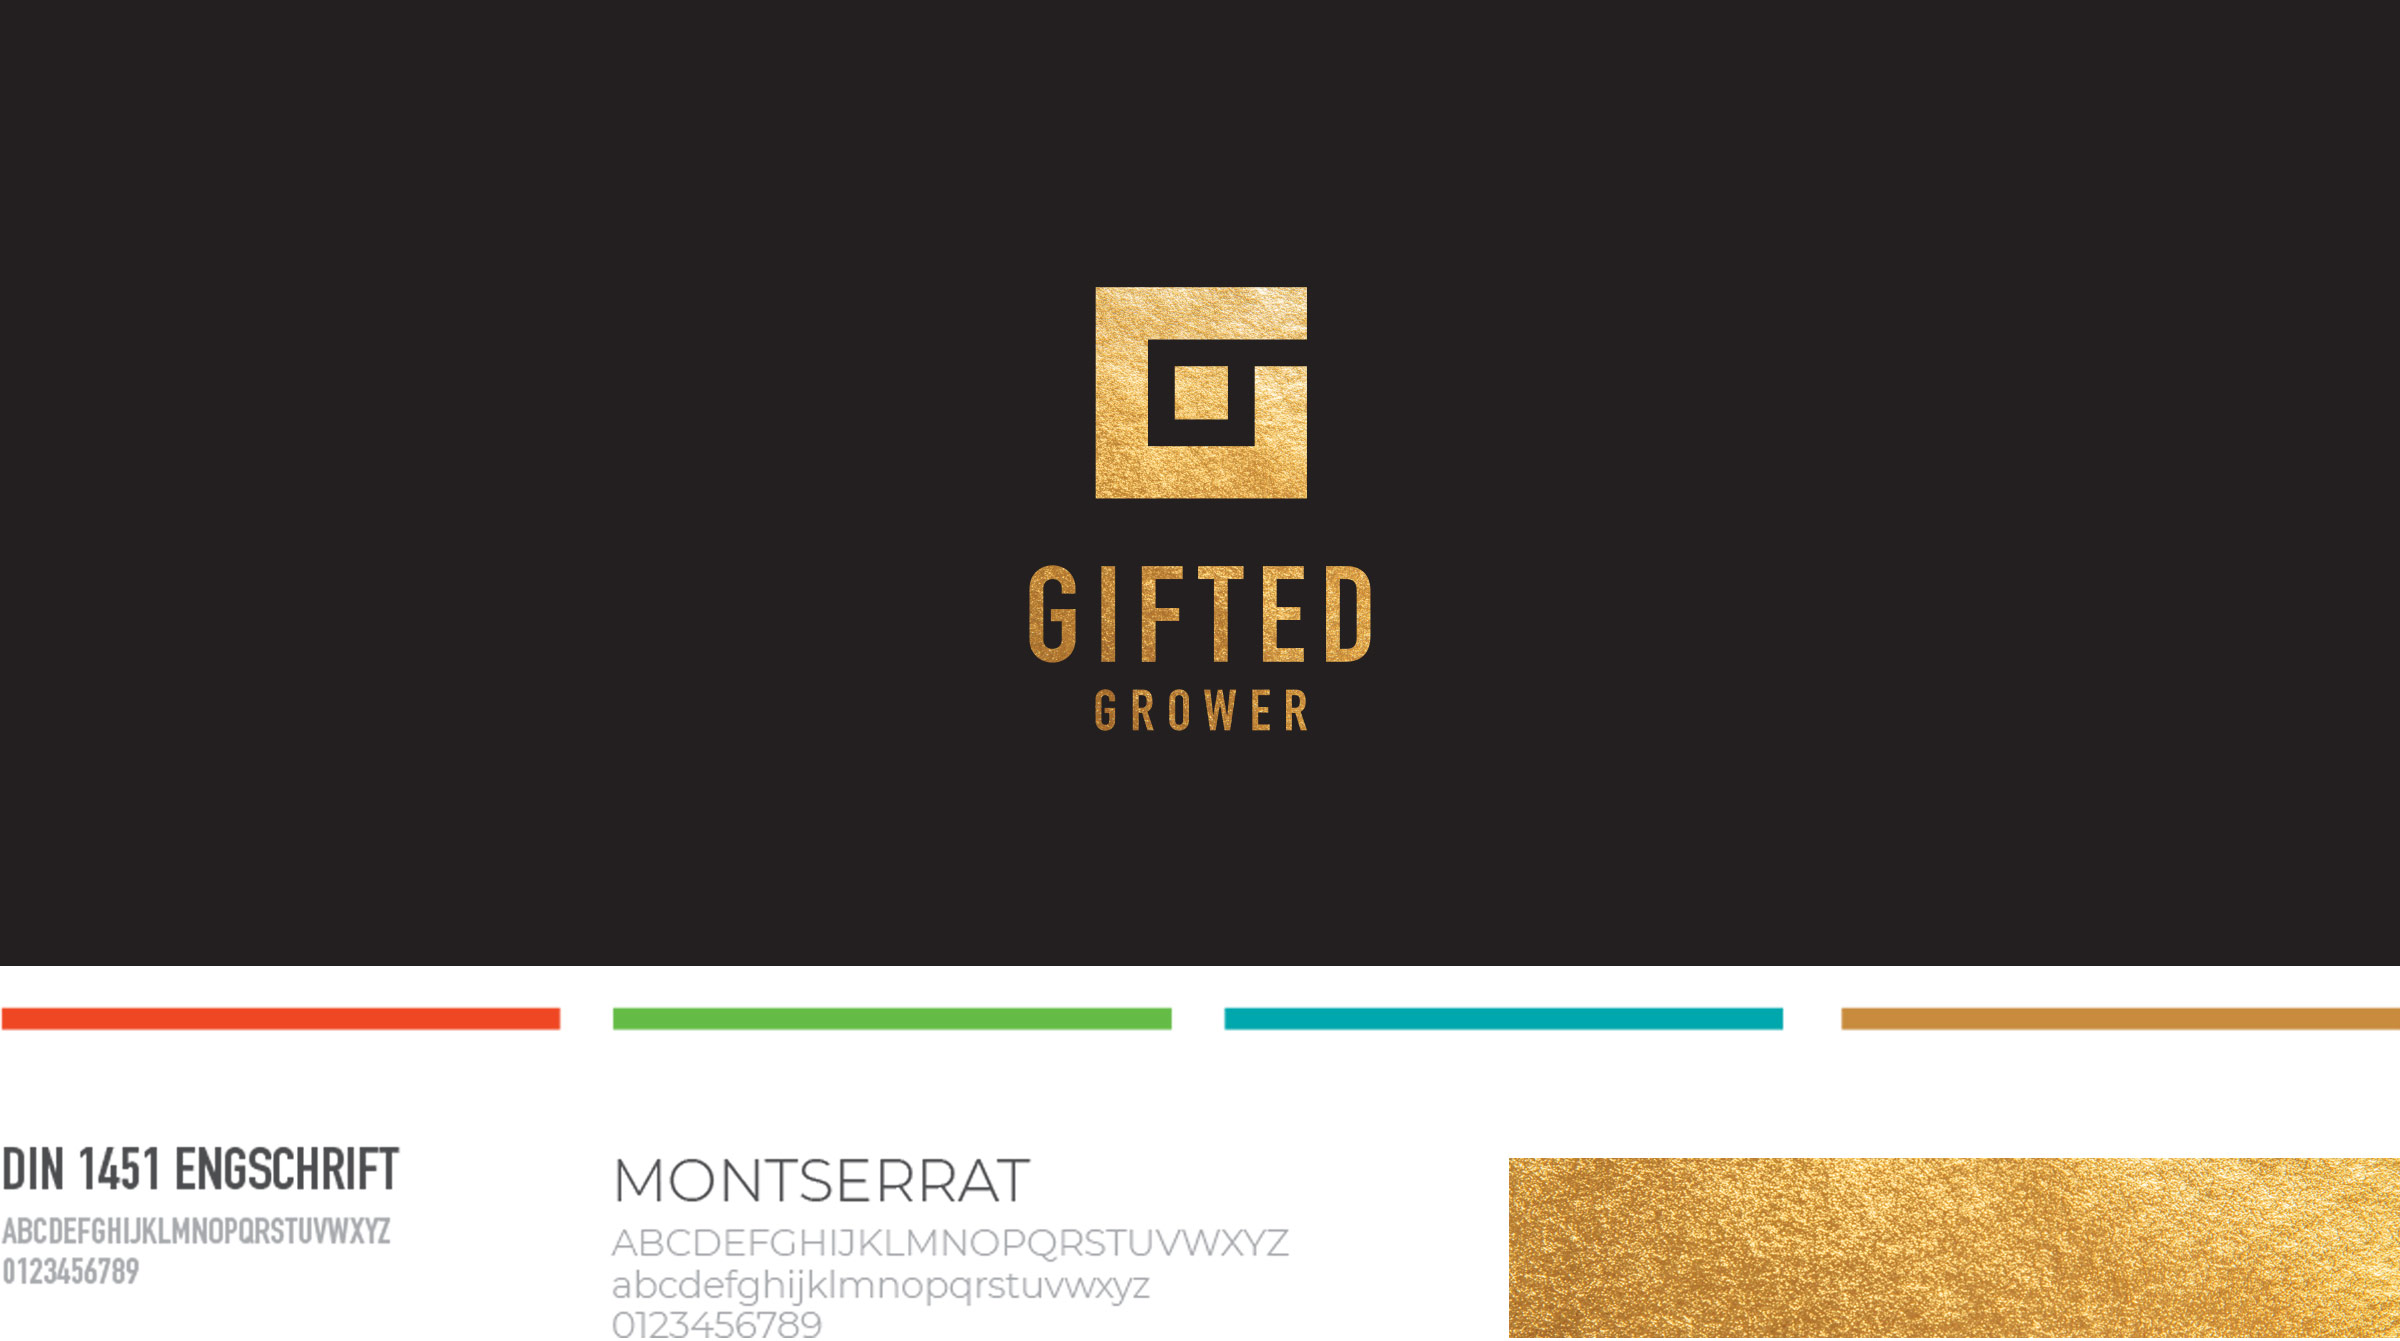 Gifted Grower logo design